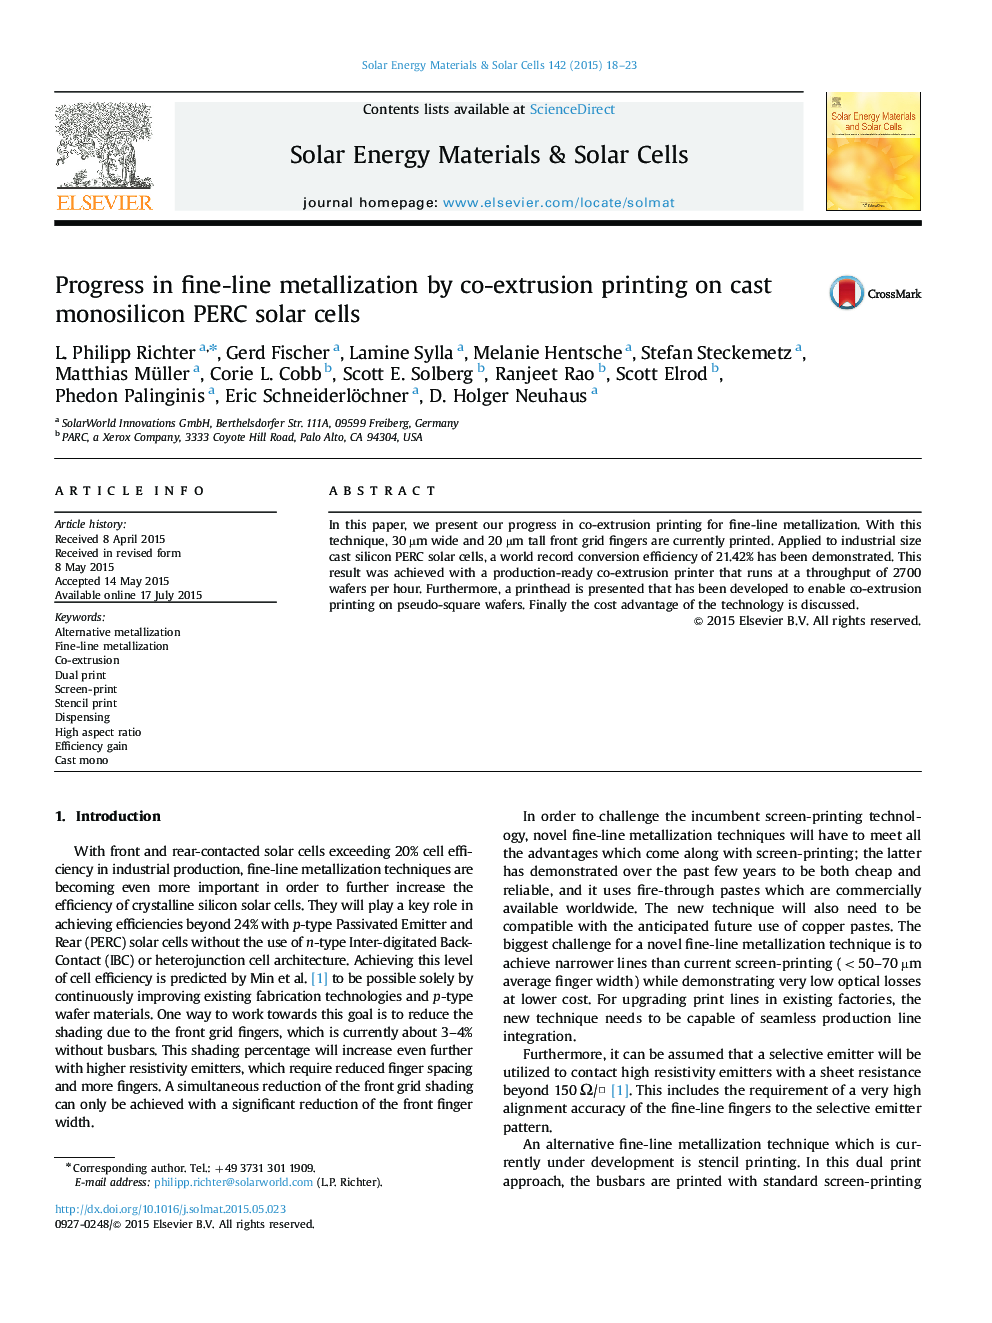 Progress in fine-line metallization by co-extrusion printing on cast monosilicon PERC solar cells